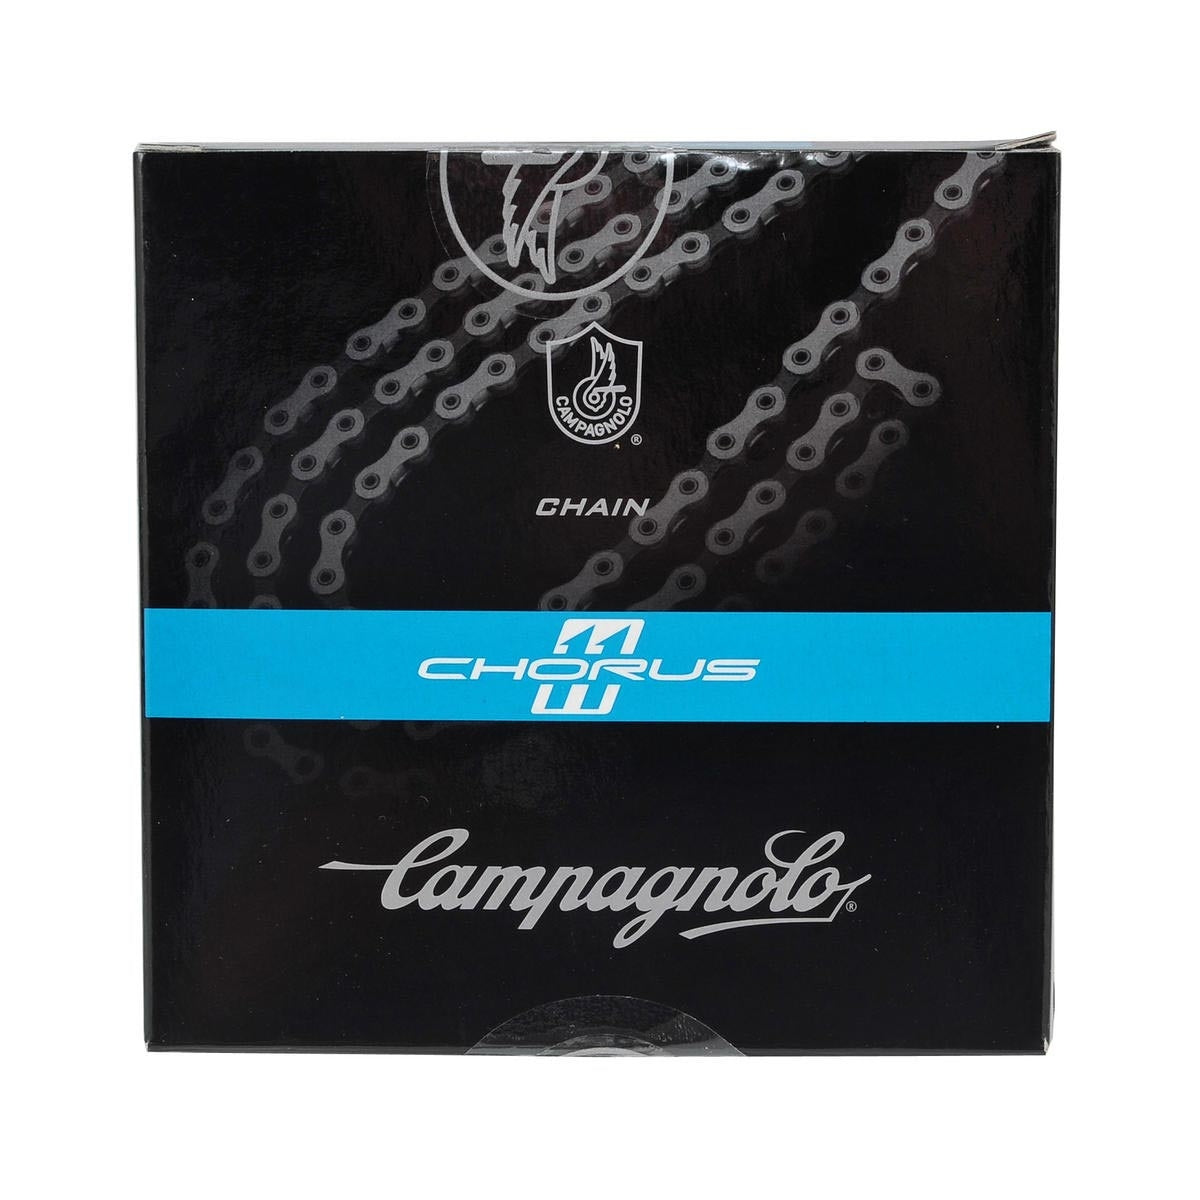 Campagnolo Chorus 11S chain 